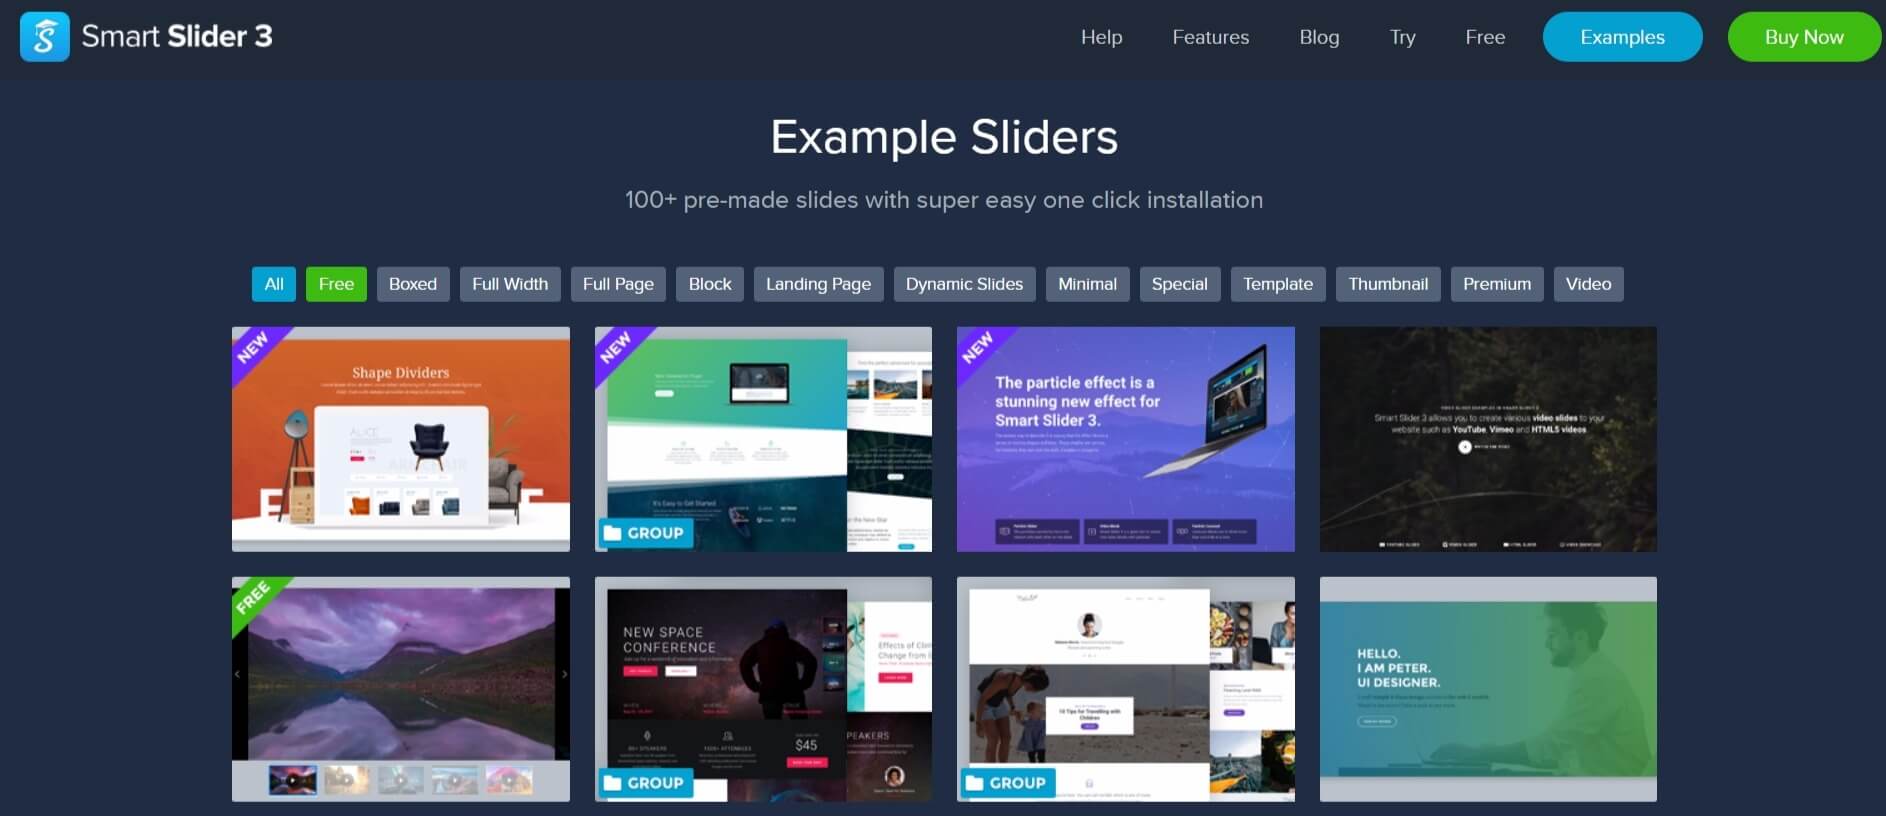 The Smart Slider 3 slider examples page